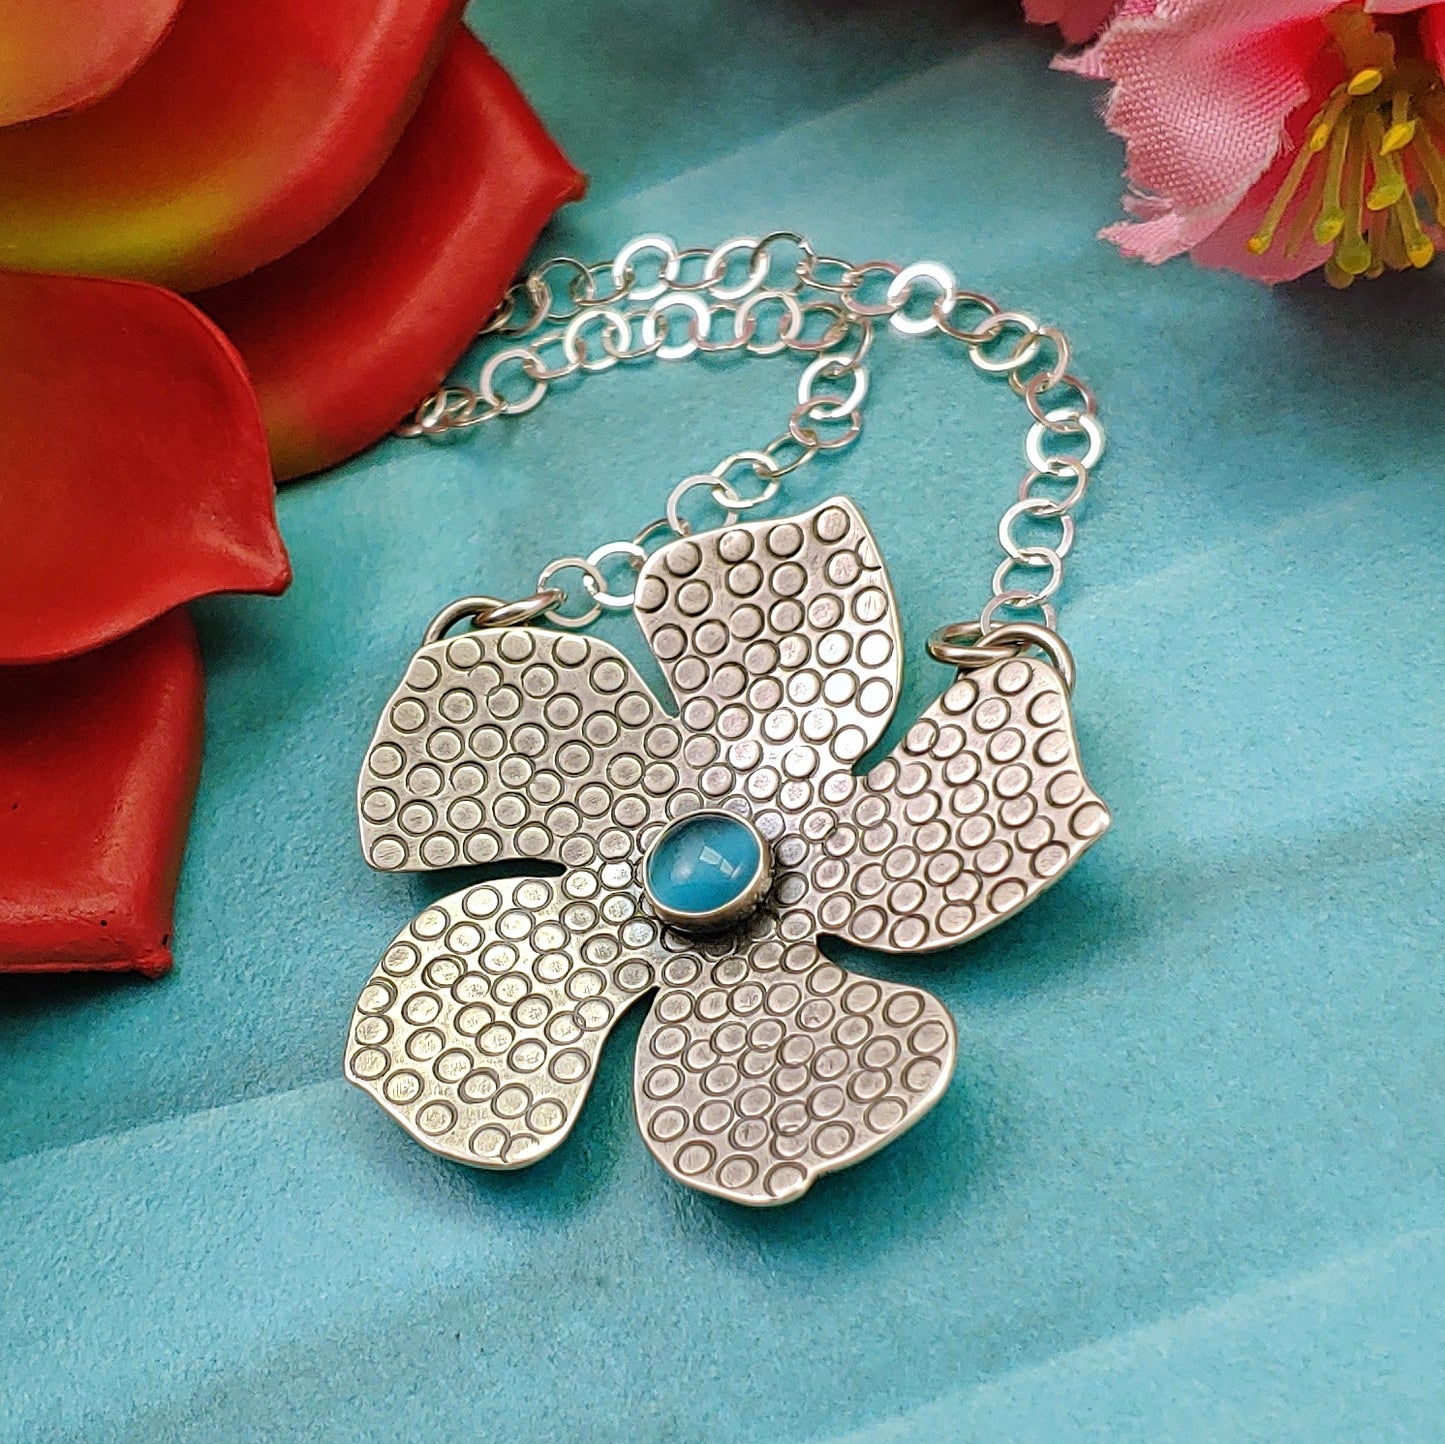 Flower Necklace with Gemstone Center